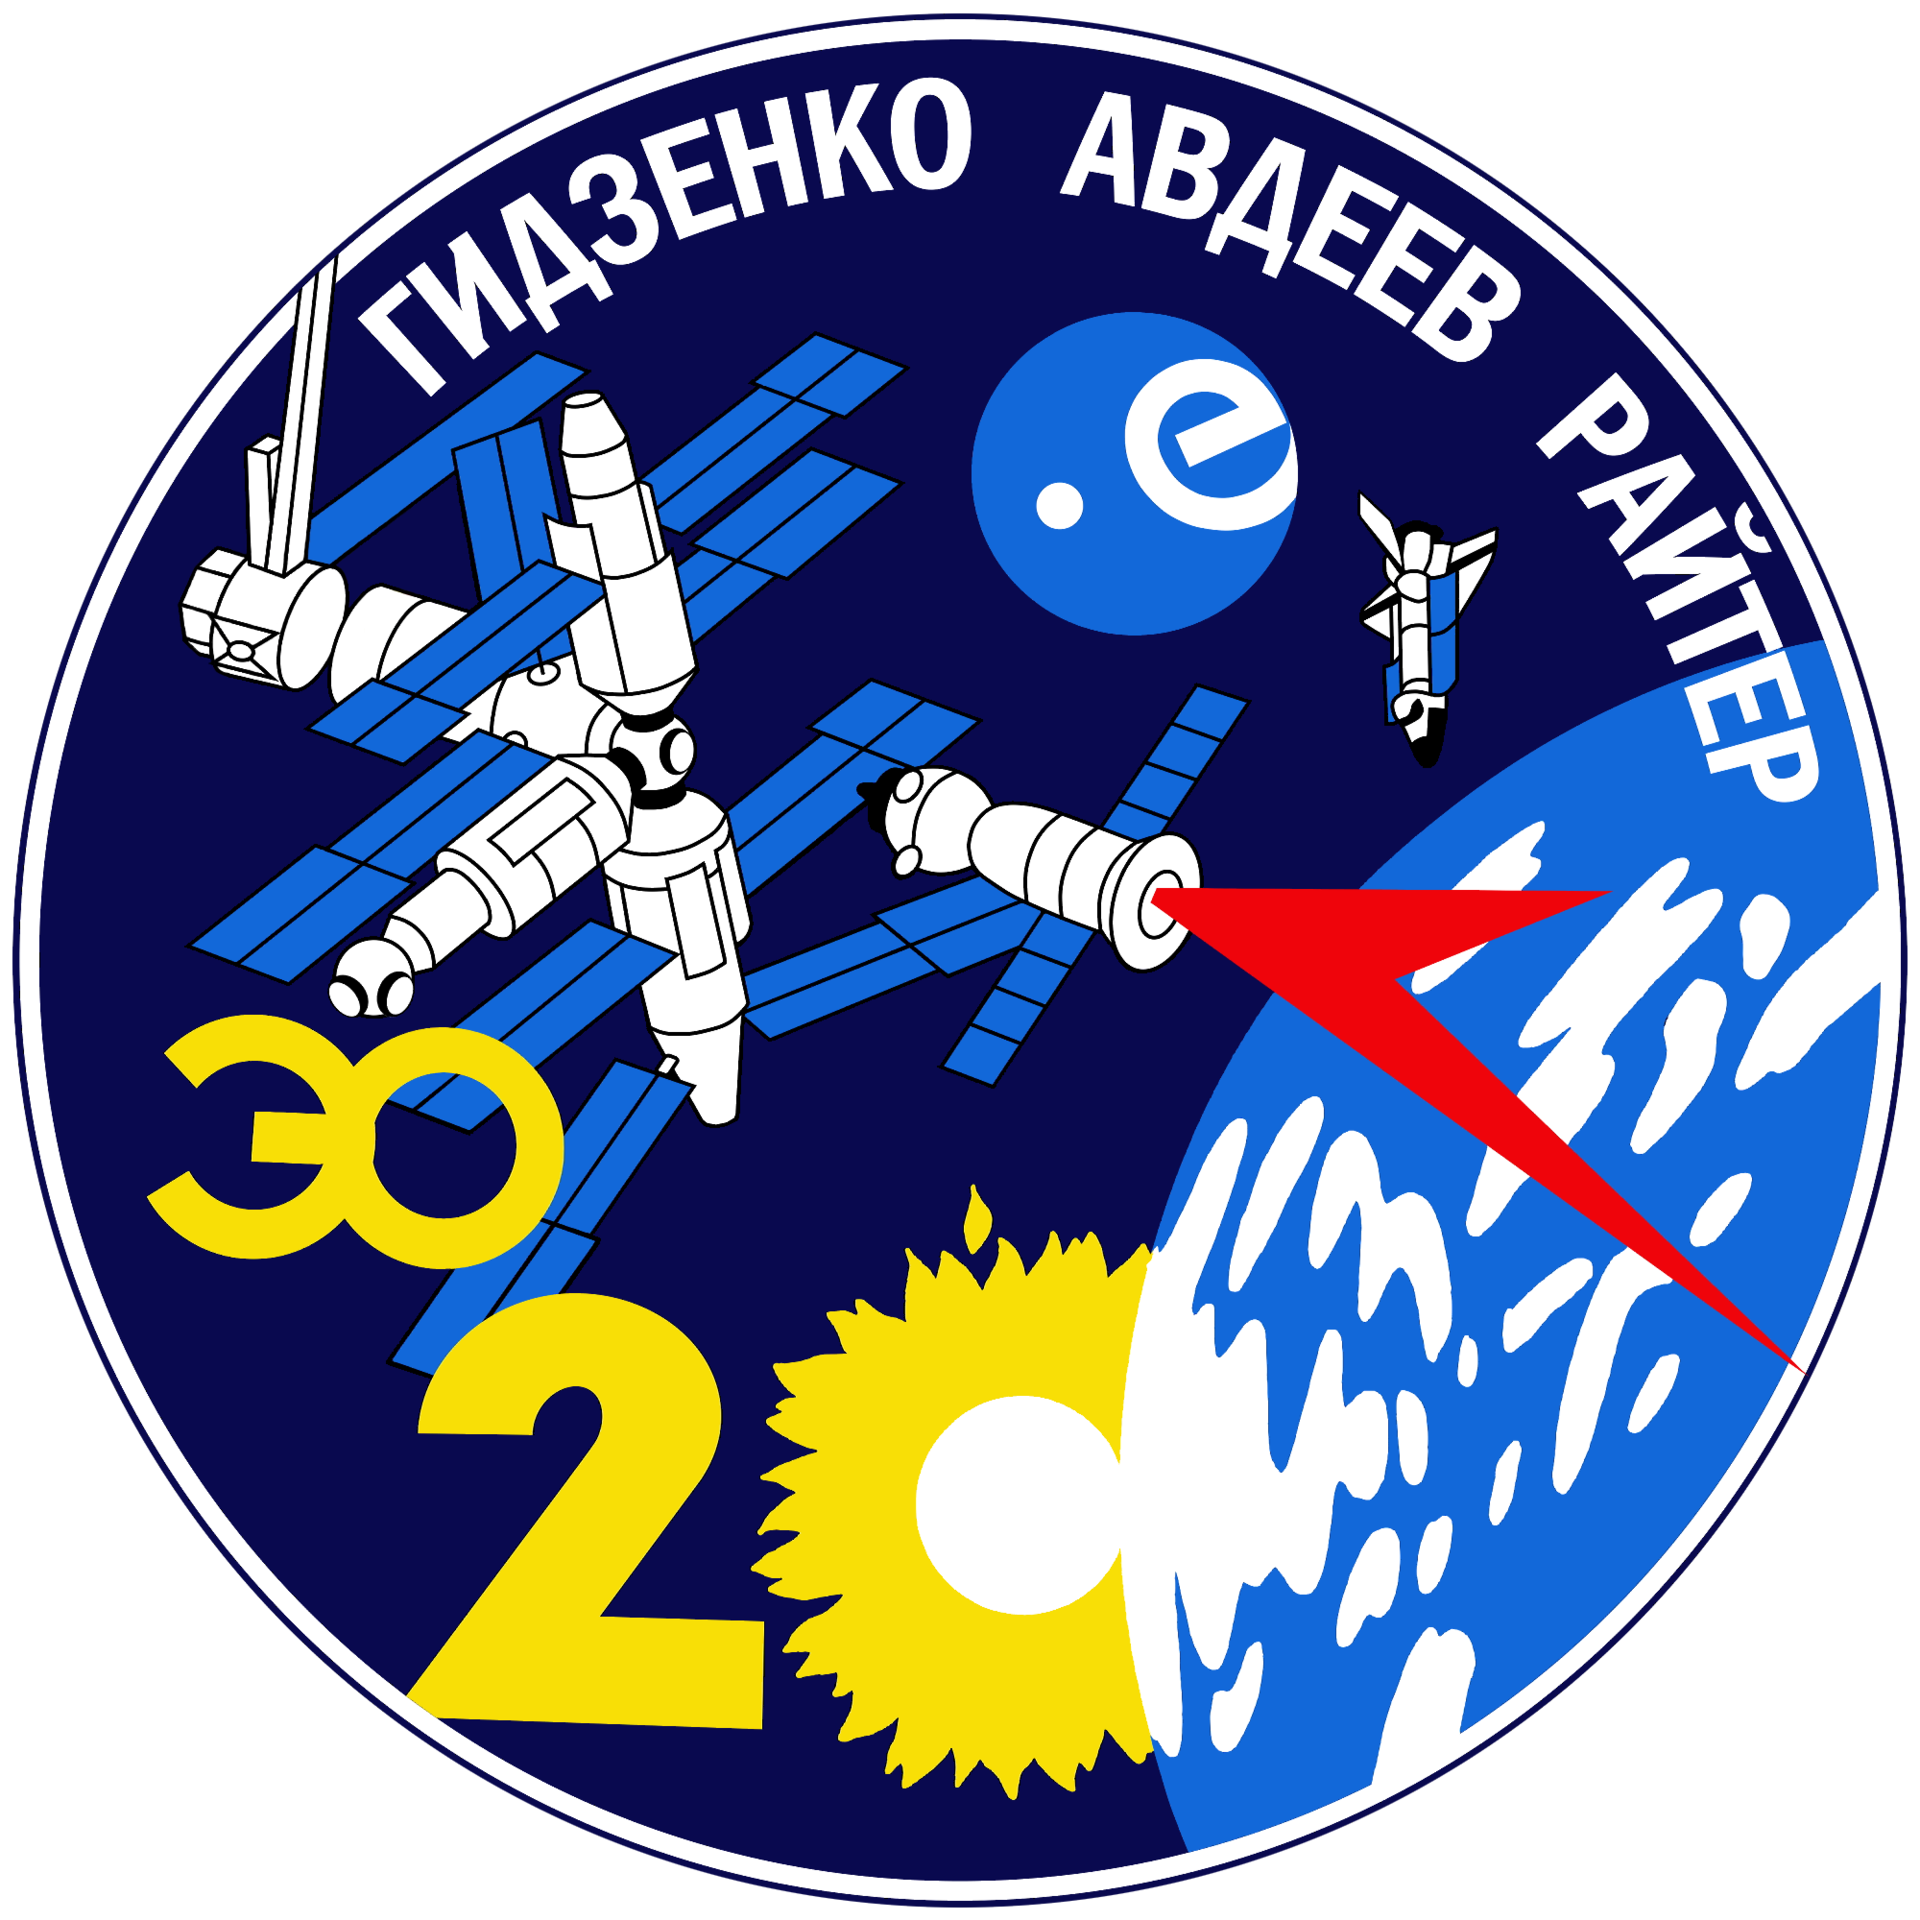 Mission patch for Soyuz TM-22